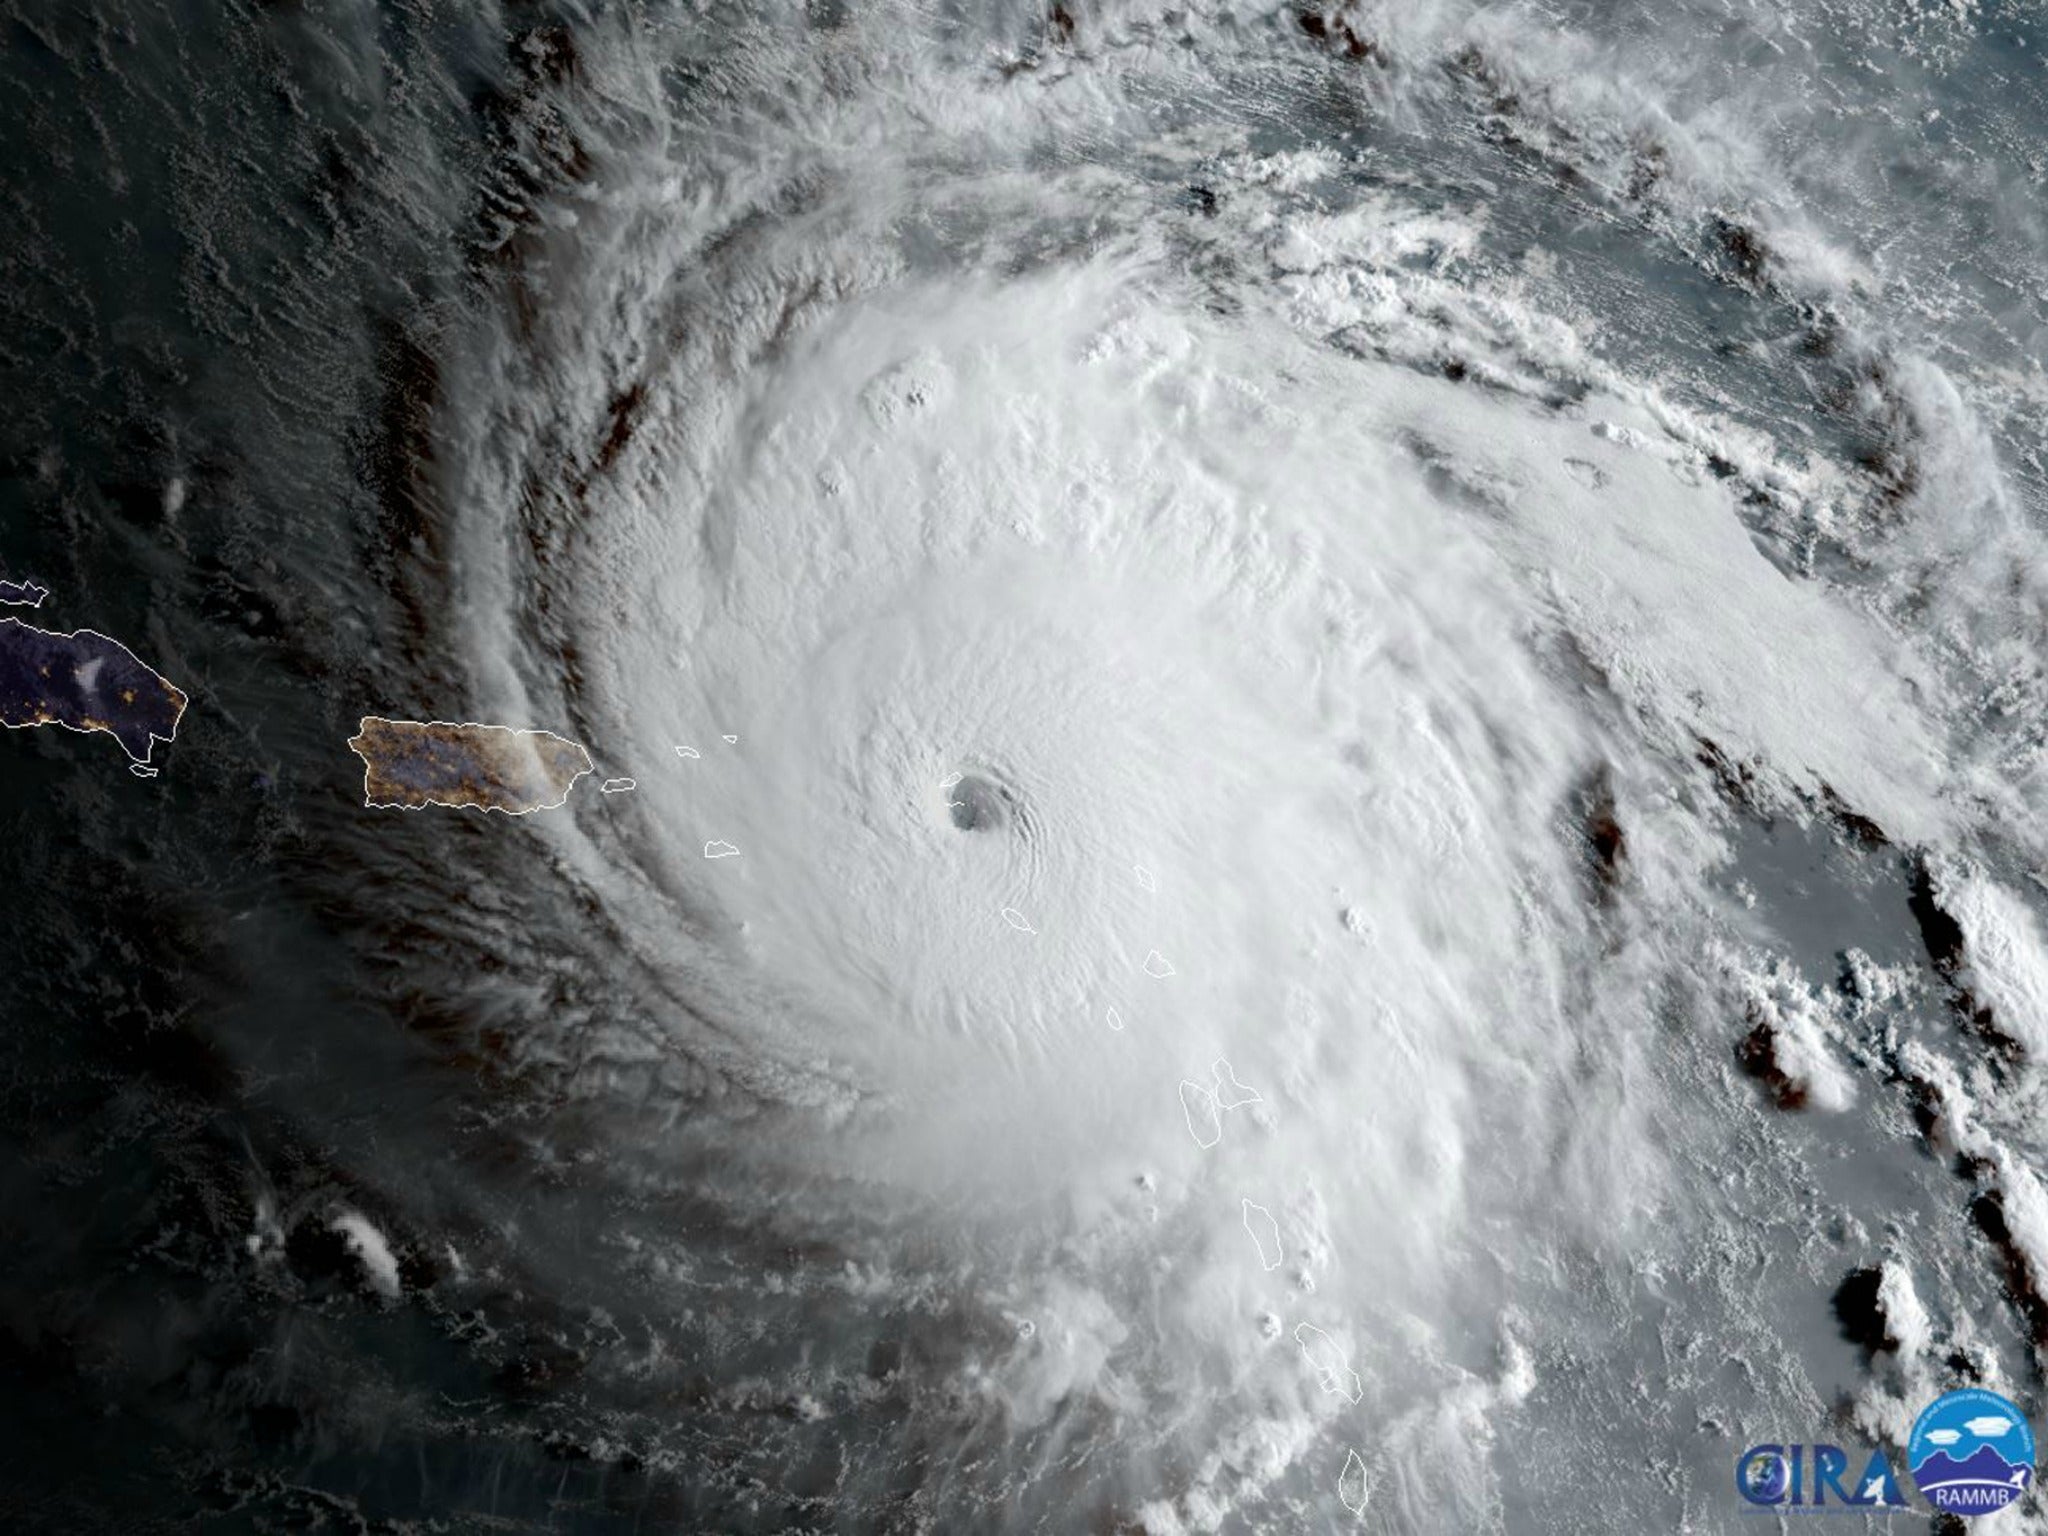 Hurricane Irma approaches the island of Antigua on Wednesday, Sept. 6, 2017